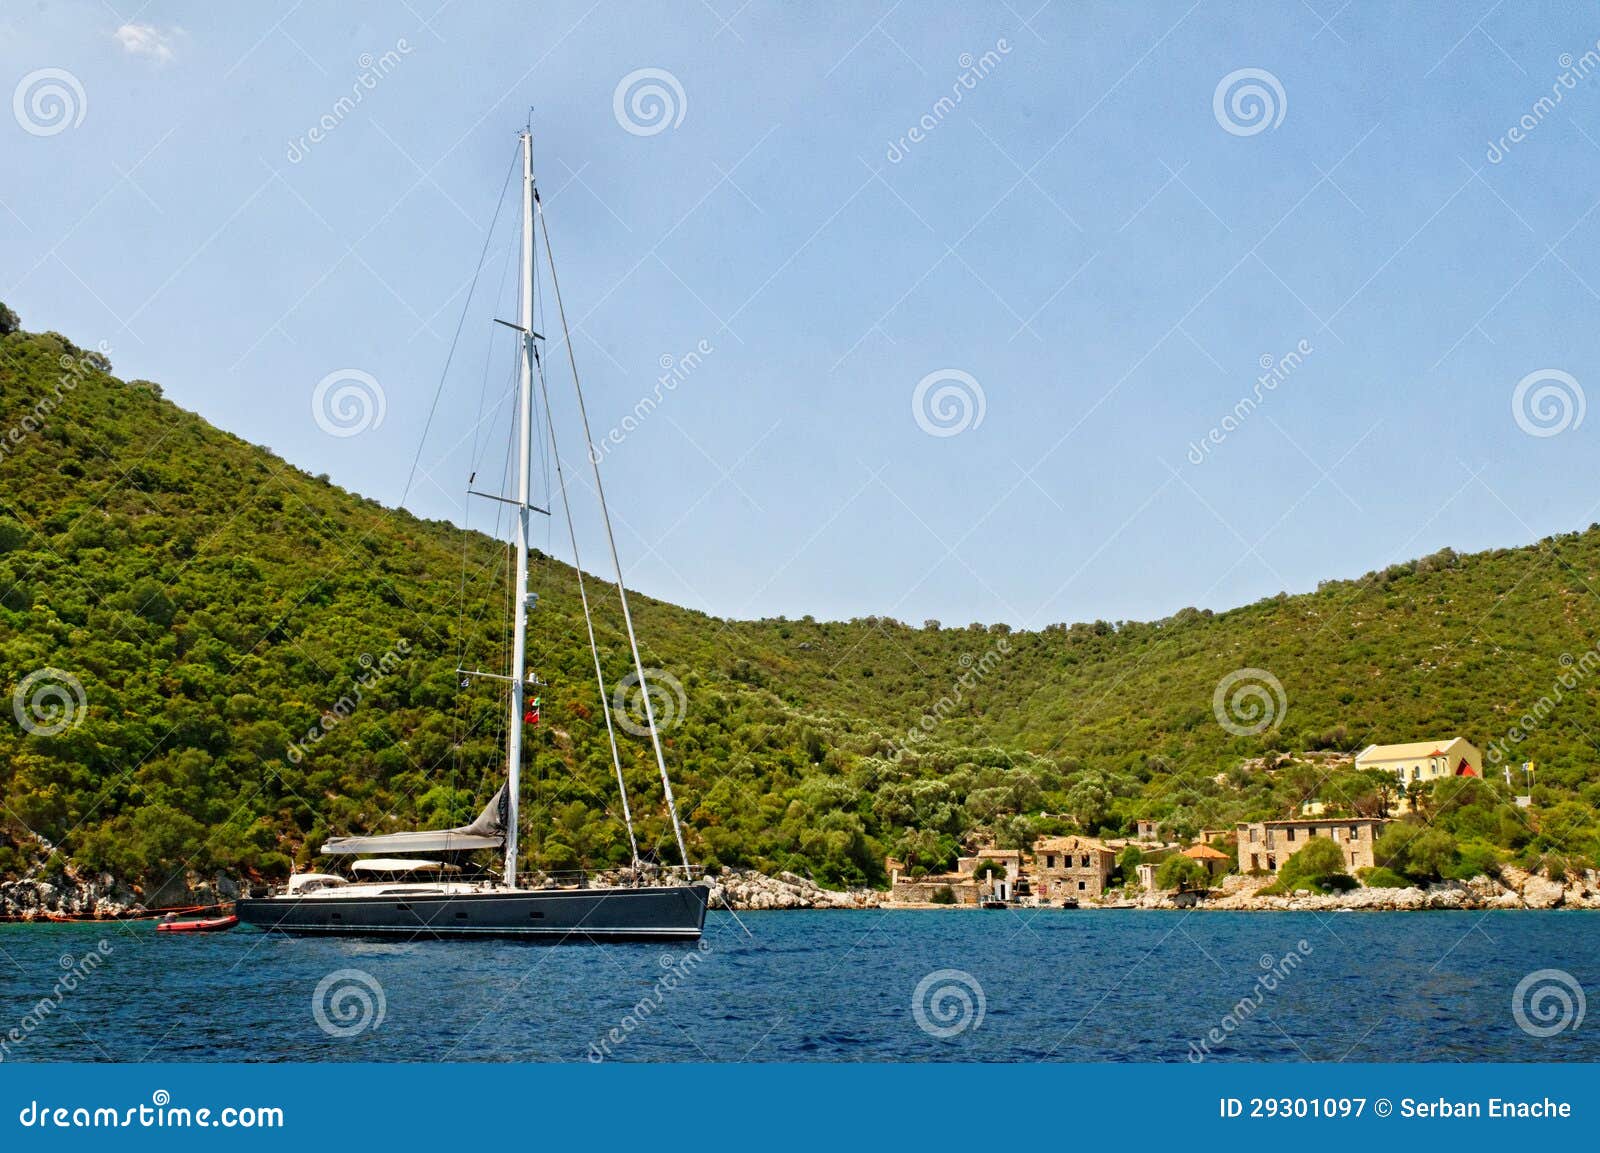 yacht moored in porto leone